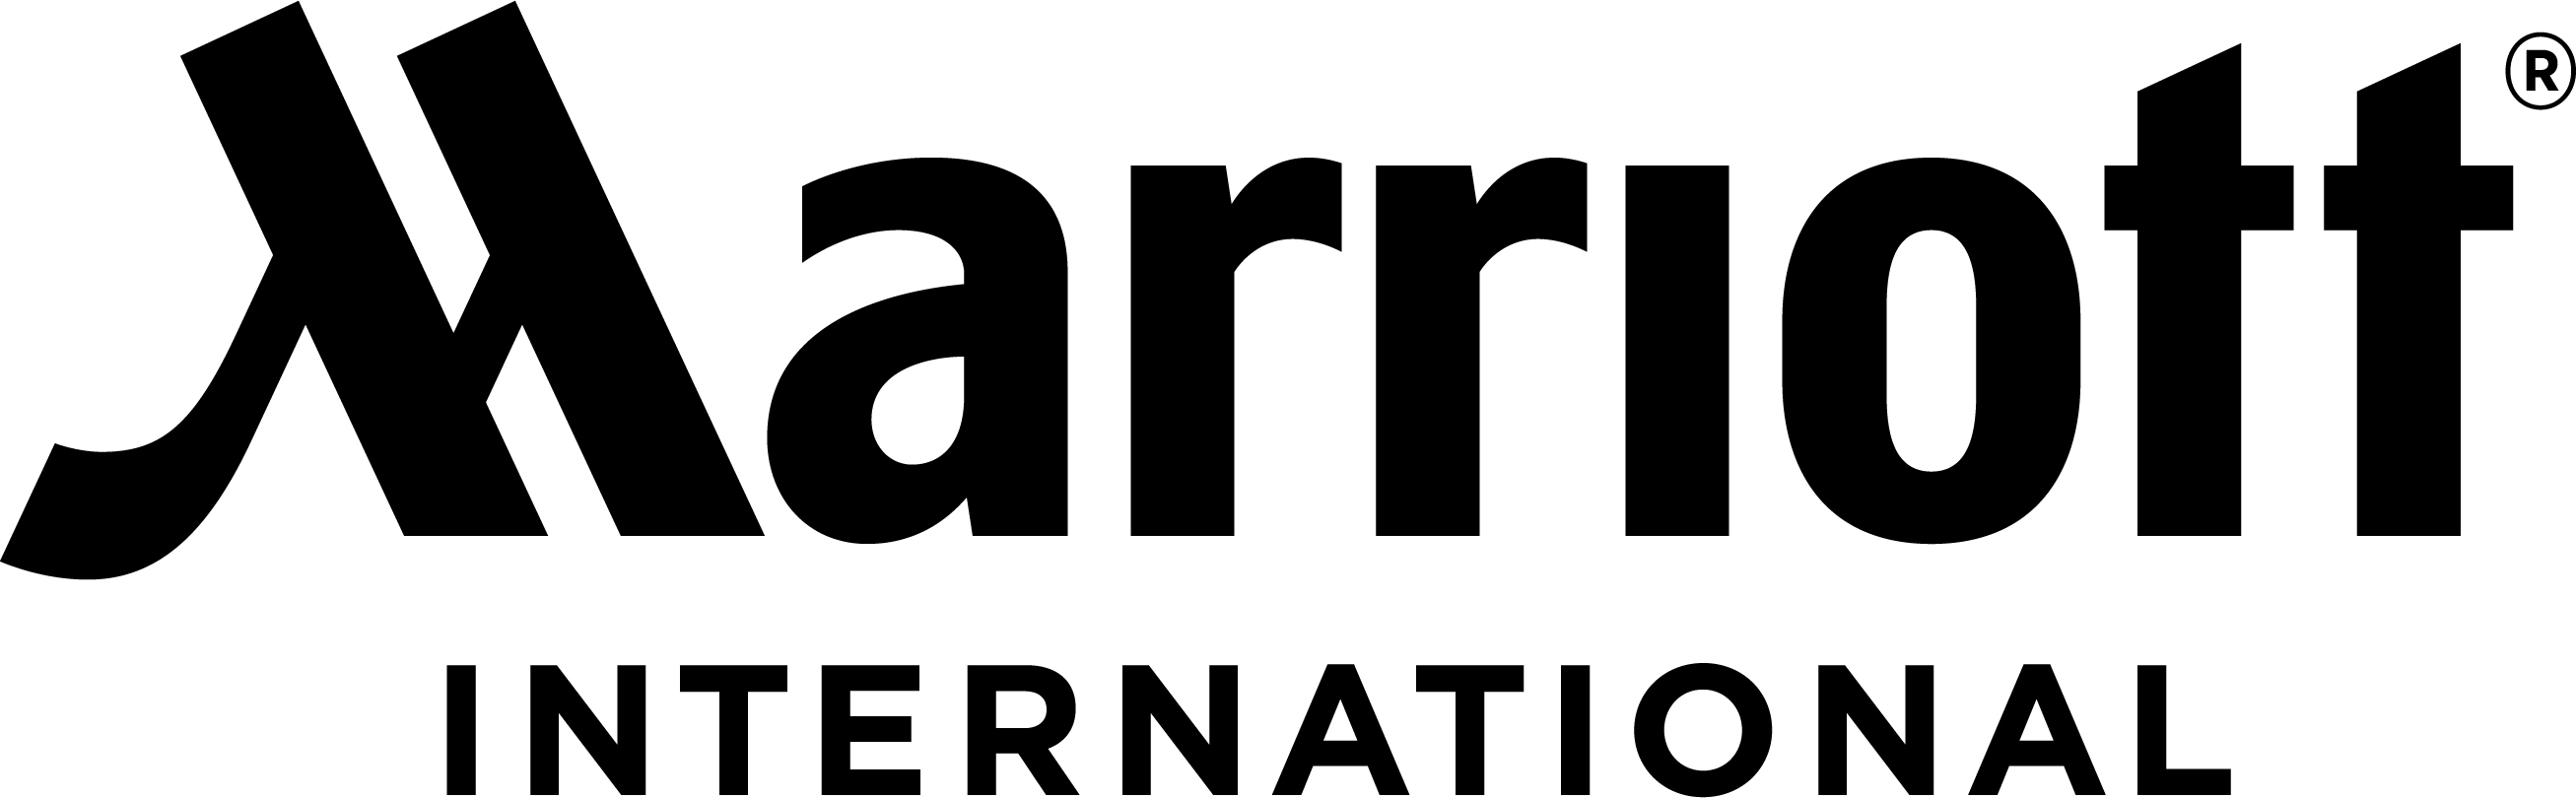 Marriott International HK Continent Office